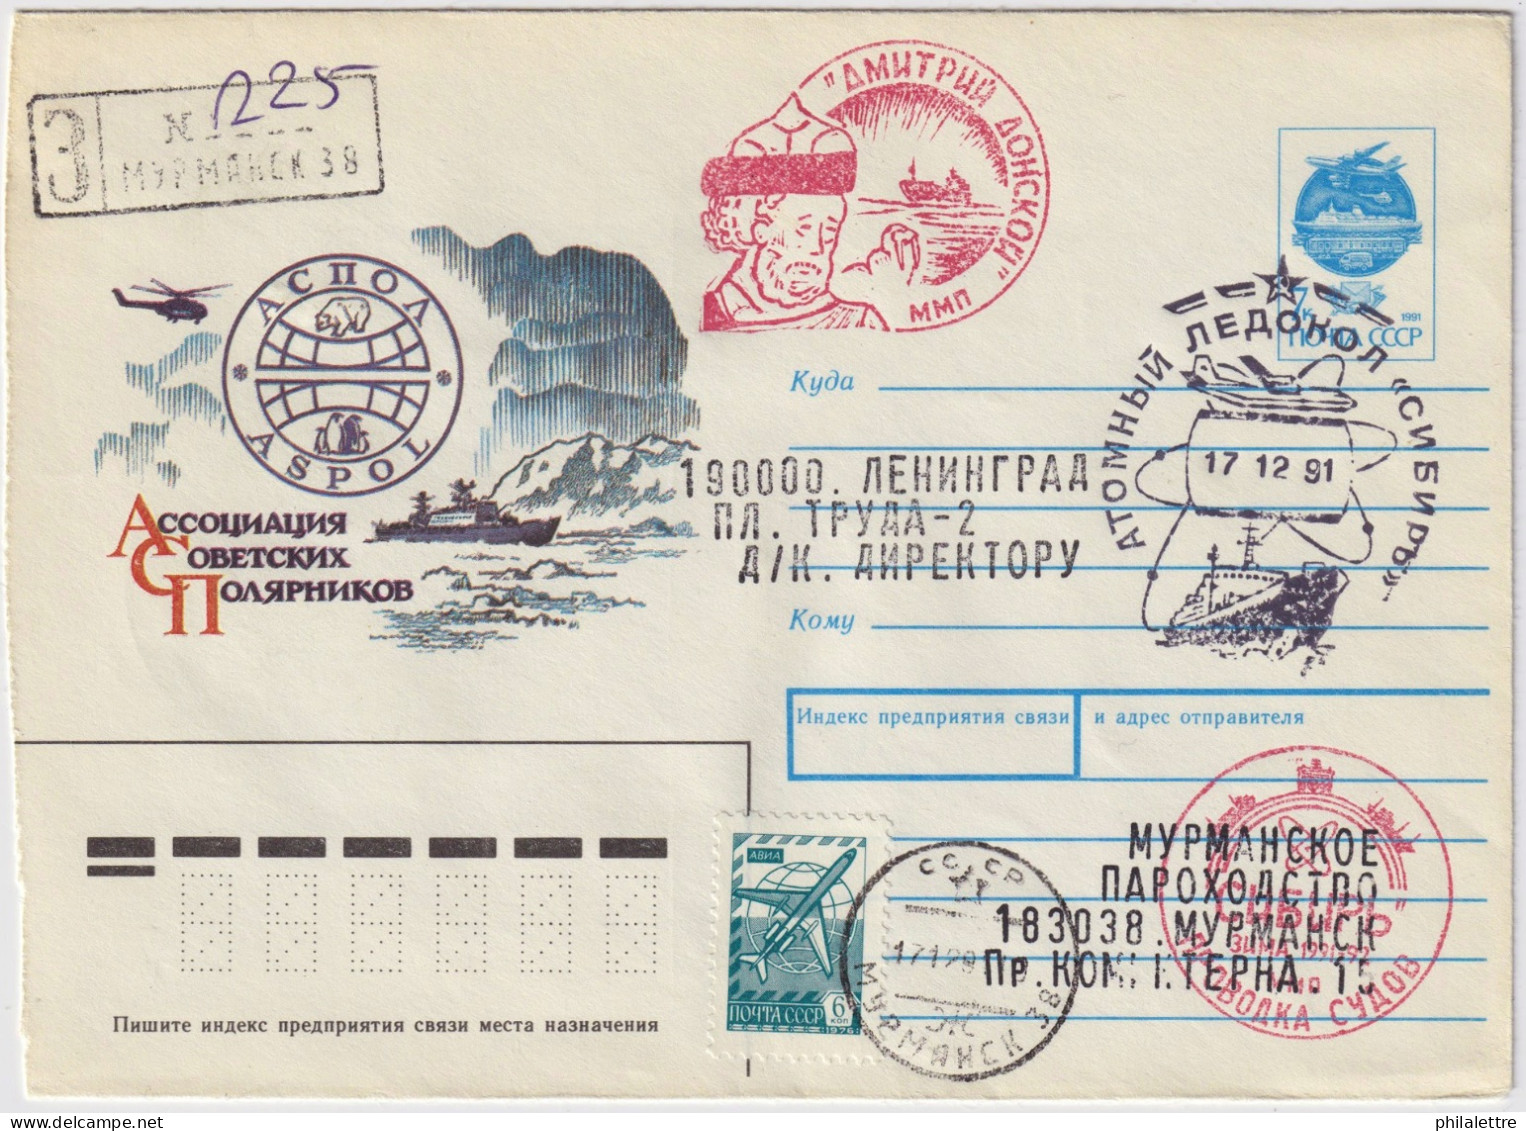 USSR / Russia - 1991 Polar Cover From S/S "DMITRY DONSKOY" Via Nuclear Icebreaker "SIBERIA" & Murmansk To Leningrad - Covers & Documents